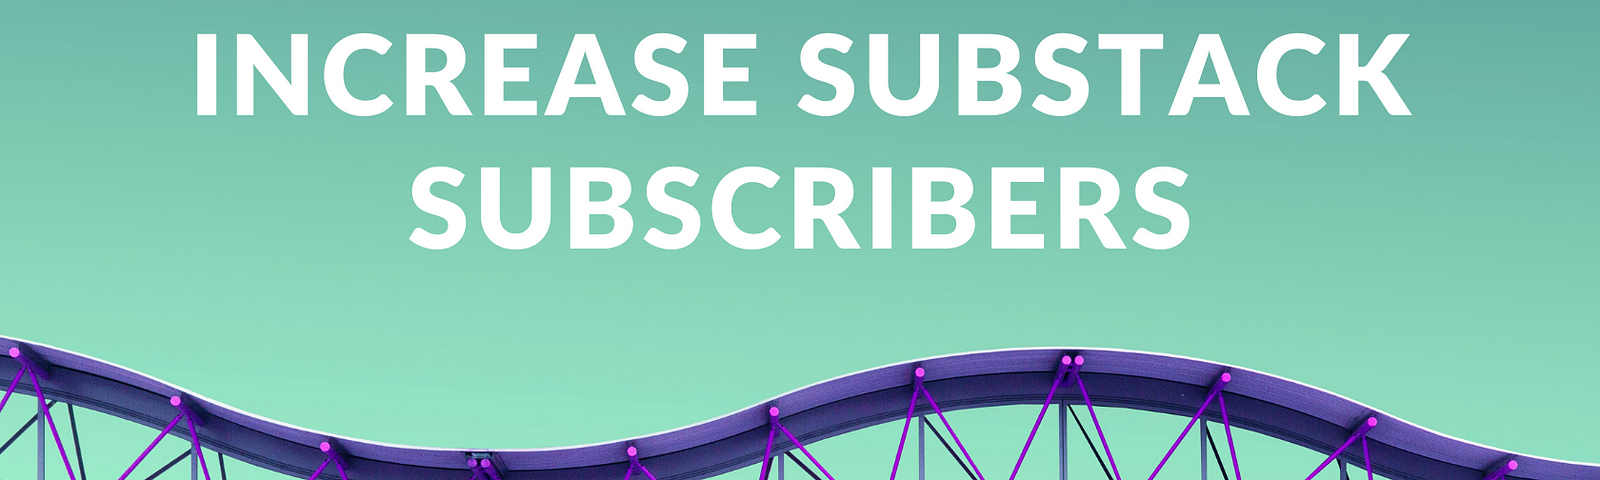 increase substack subscribers, substack guide, substack newsletter, what is substack, substack paid subscribers, substack